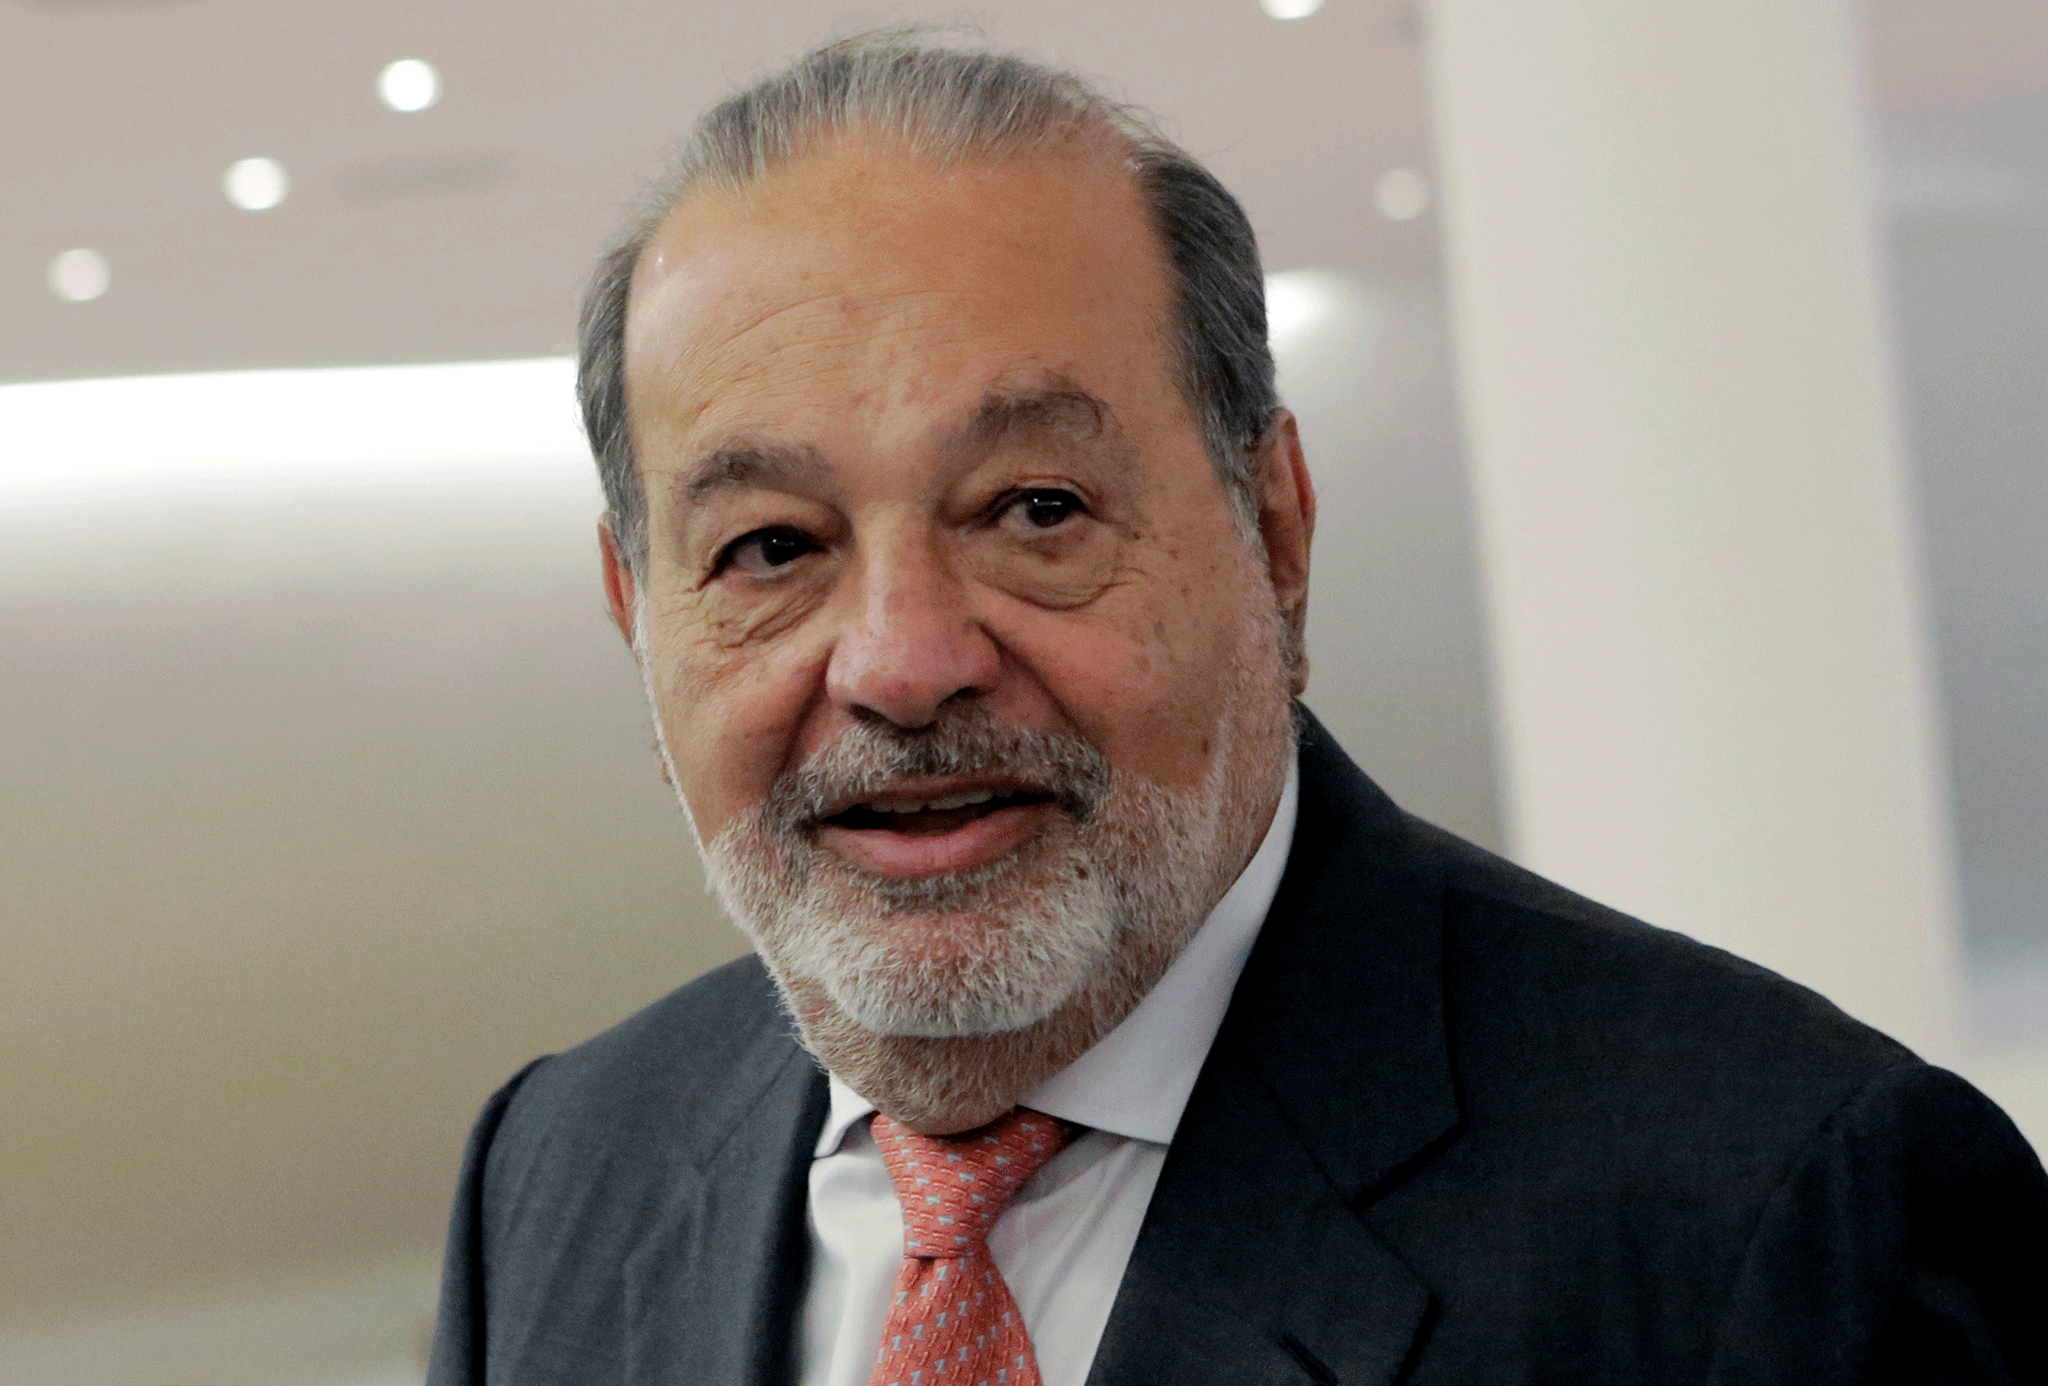 Carlos Slim Biography: Age, Height, Education, Wife, Children, Net Worth